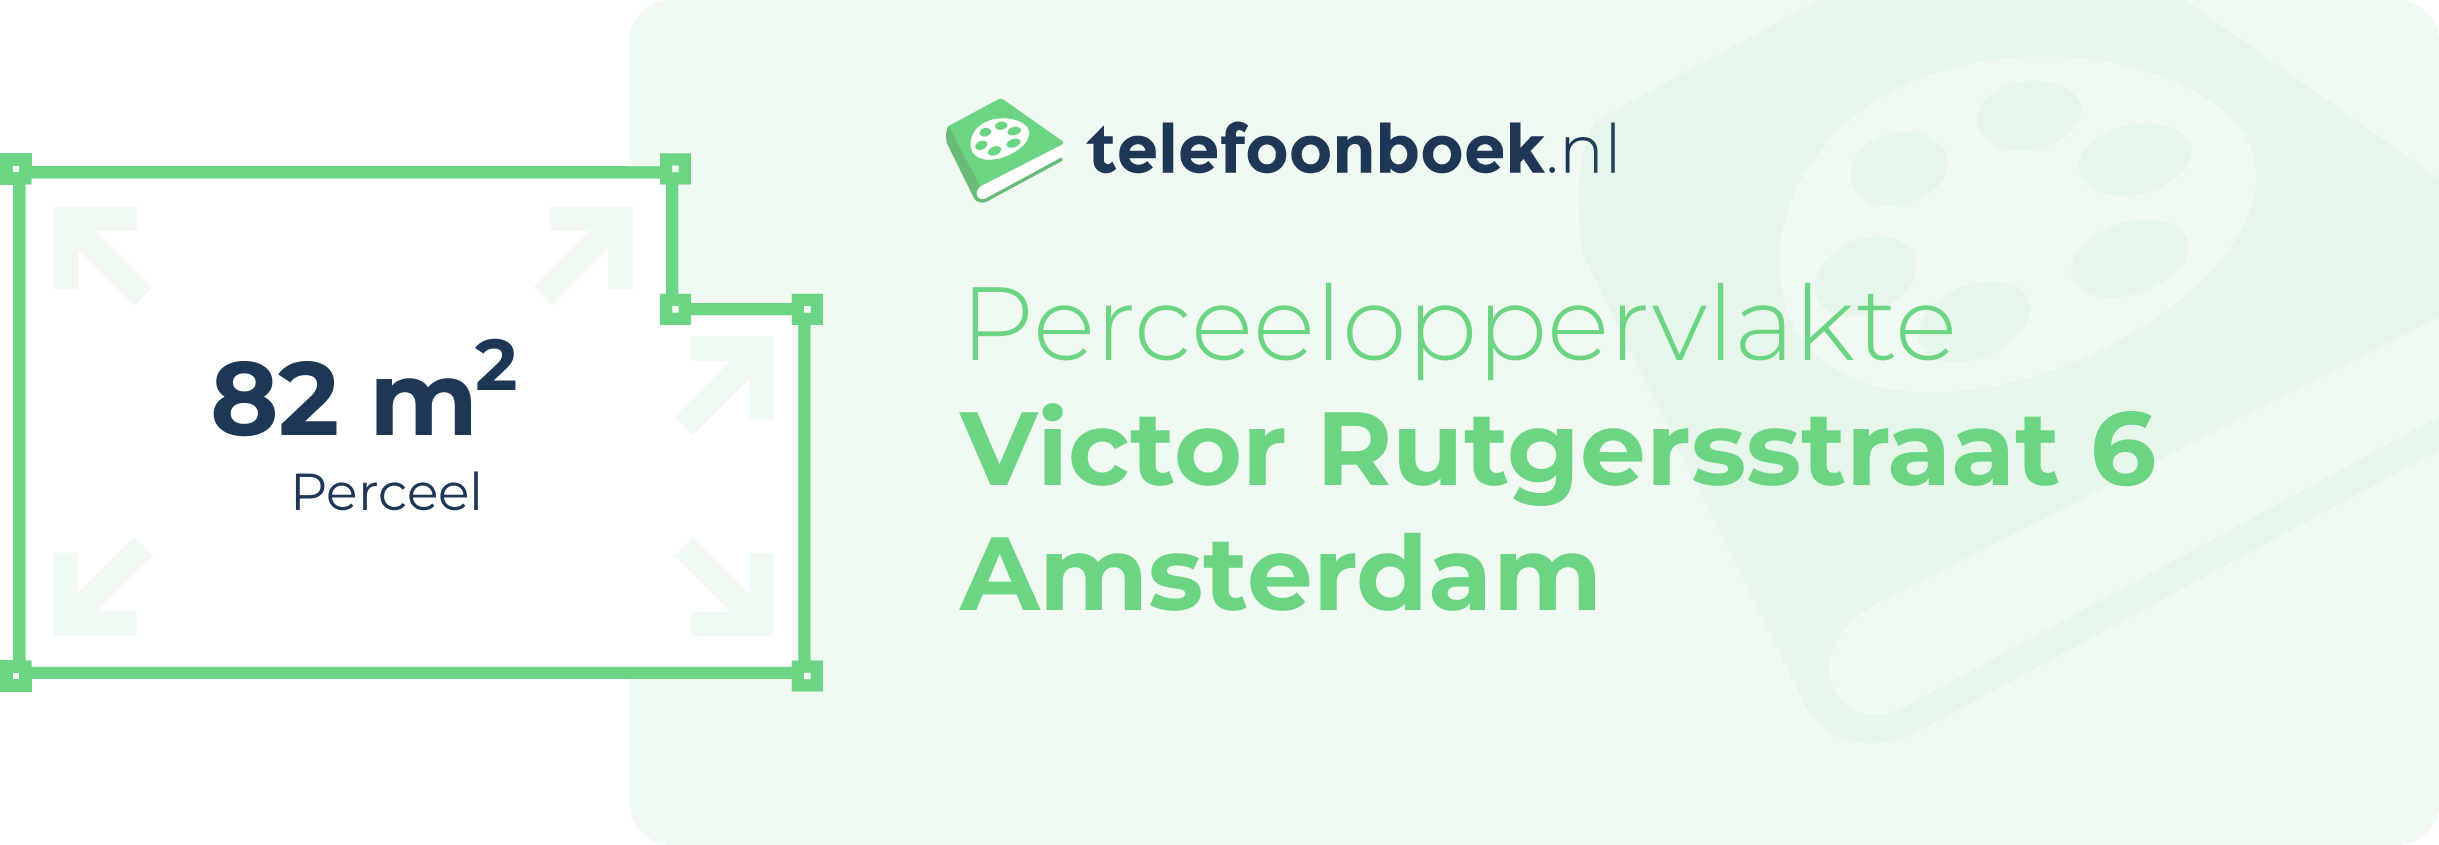 Perceeloppervlakte Victor Rutgersstraat 6 Amsterdam